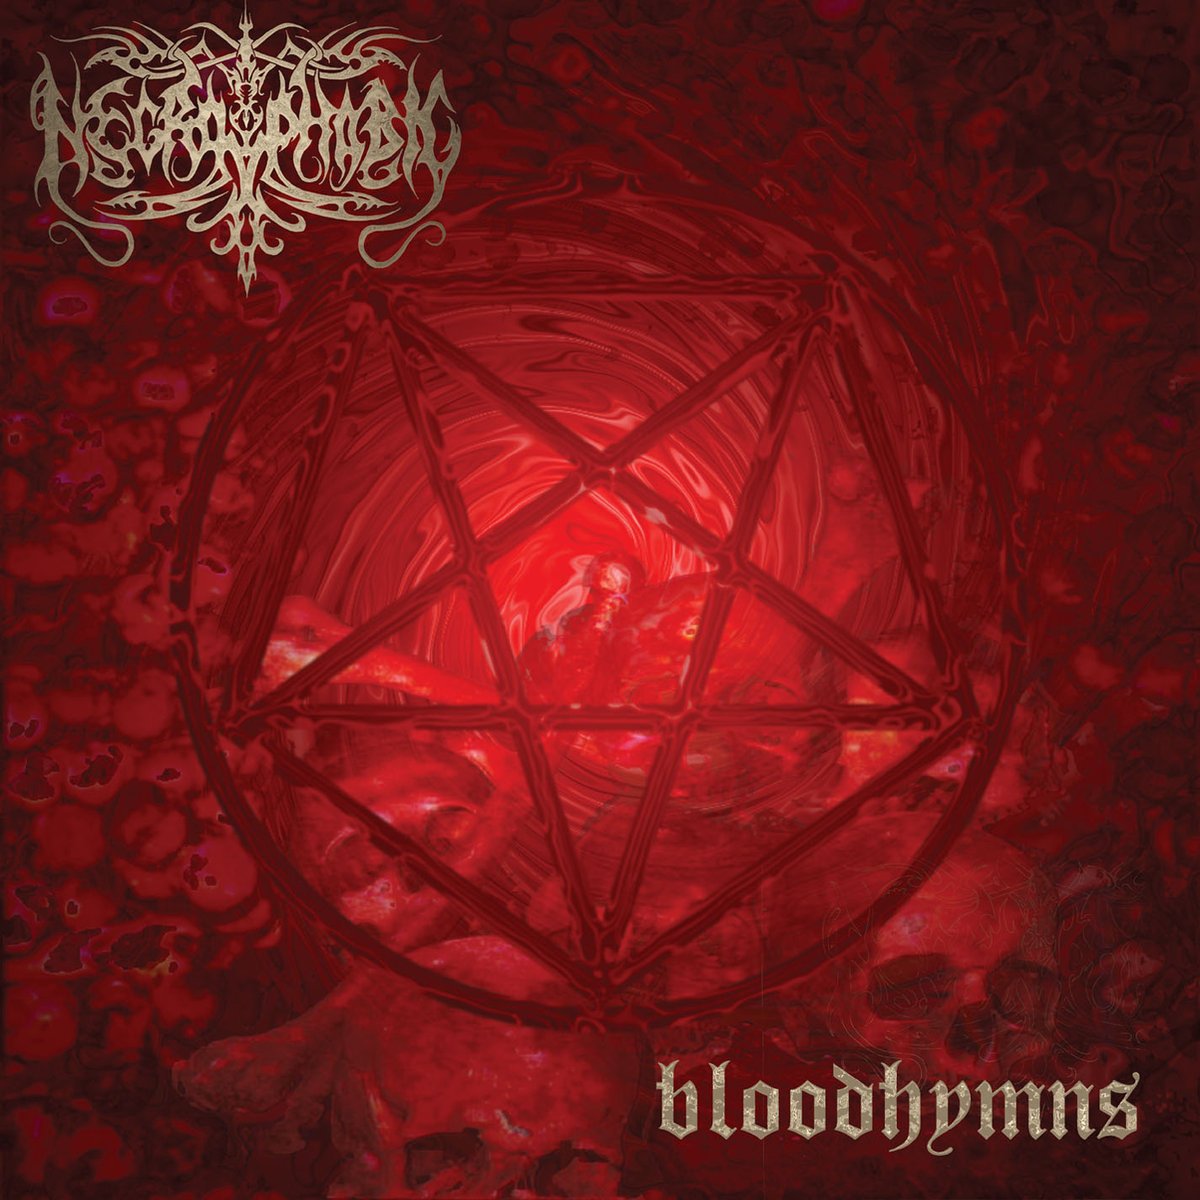 Necrophobic-Bloodhymns-REMASTERED-LP-FLAC-2018-mwnd Download